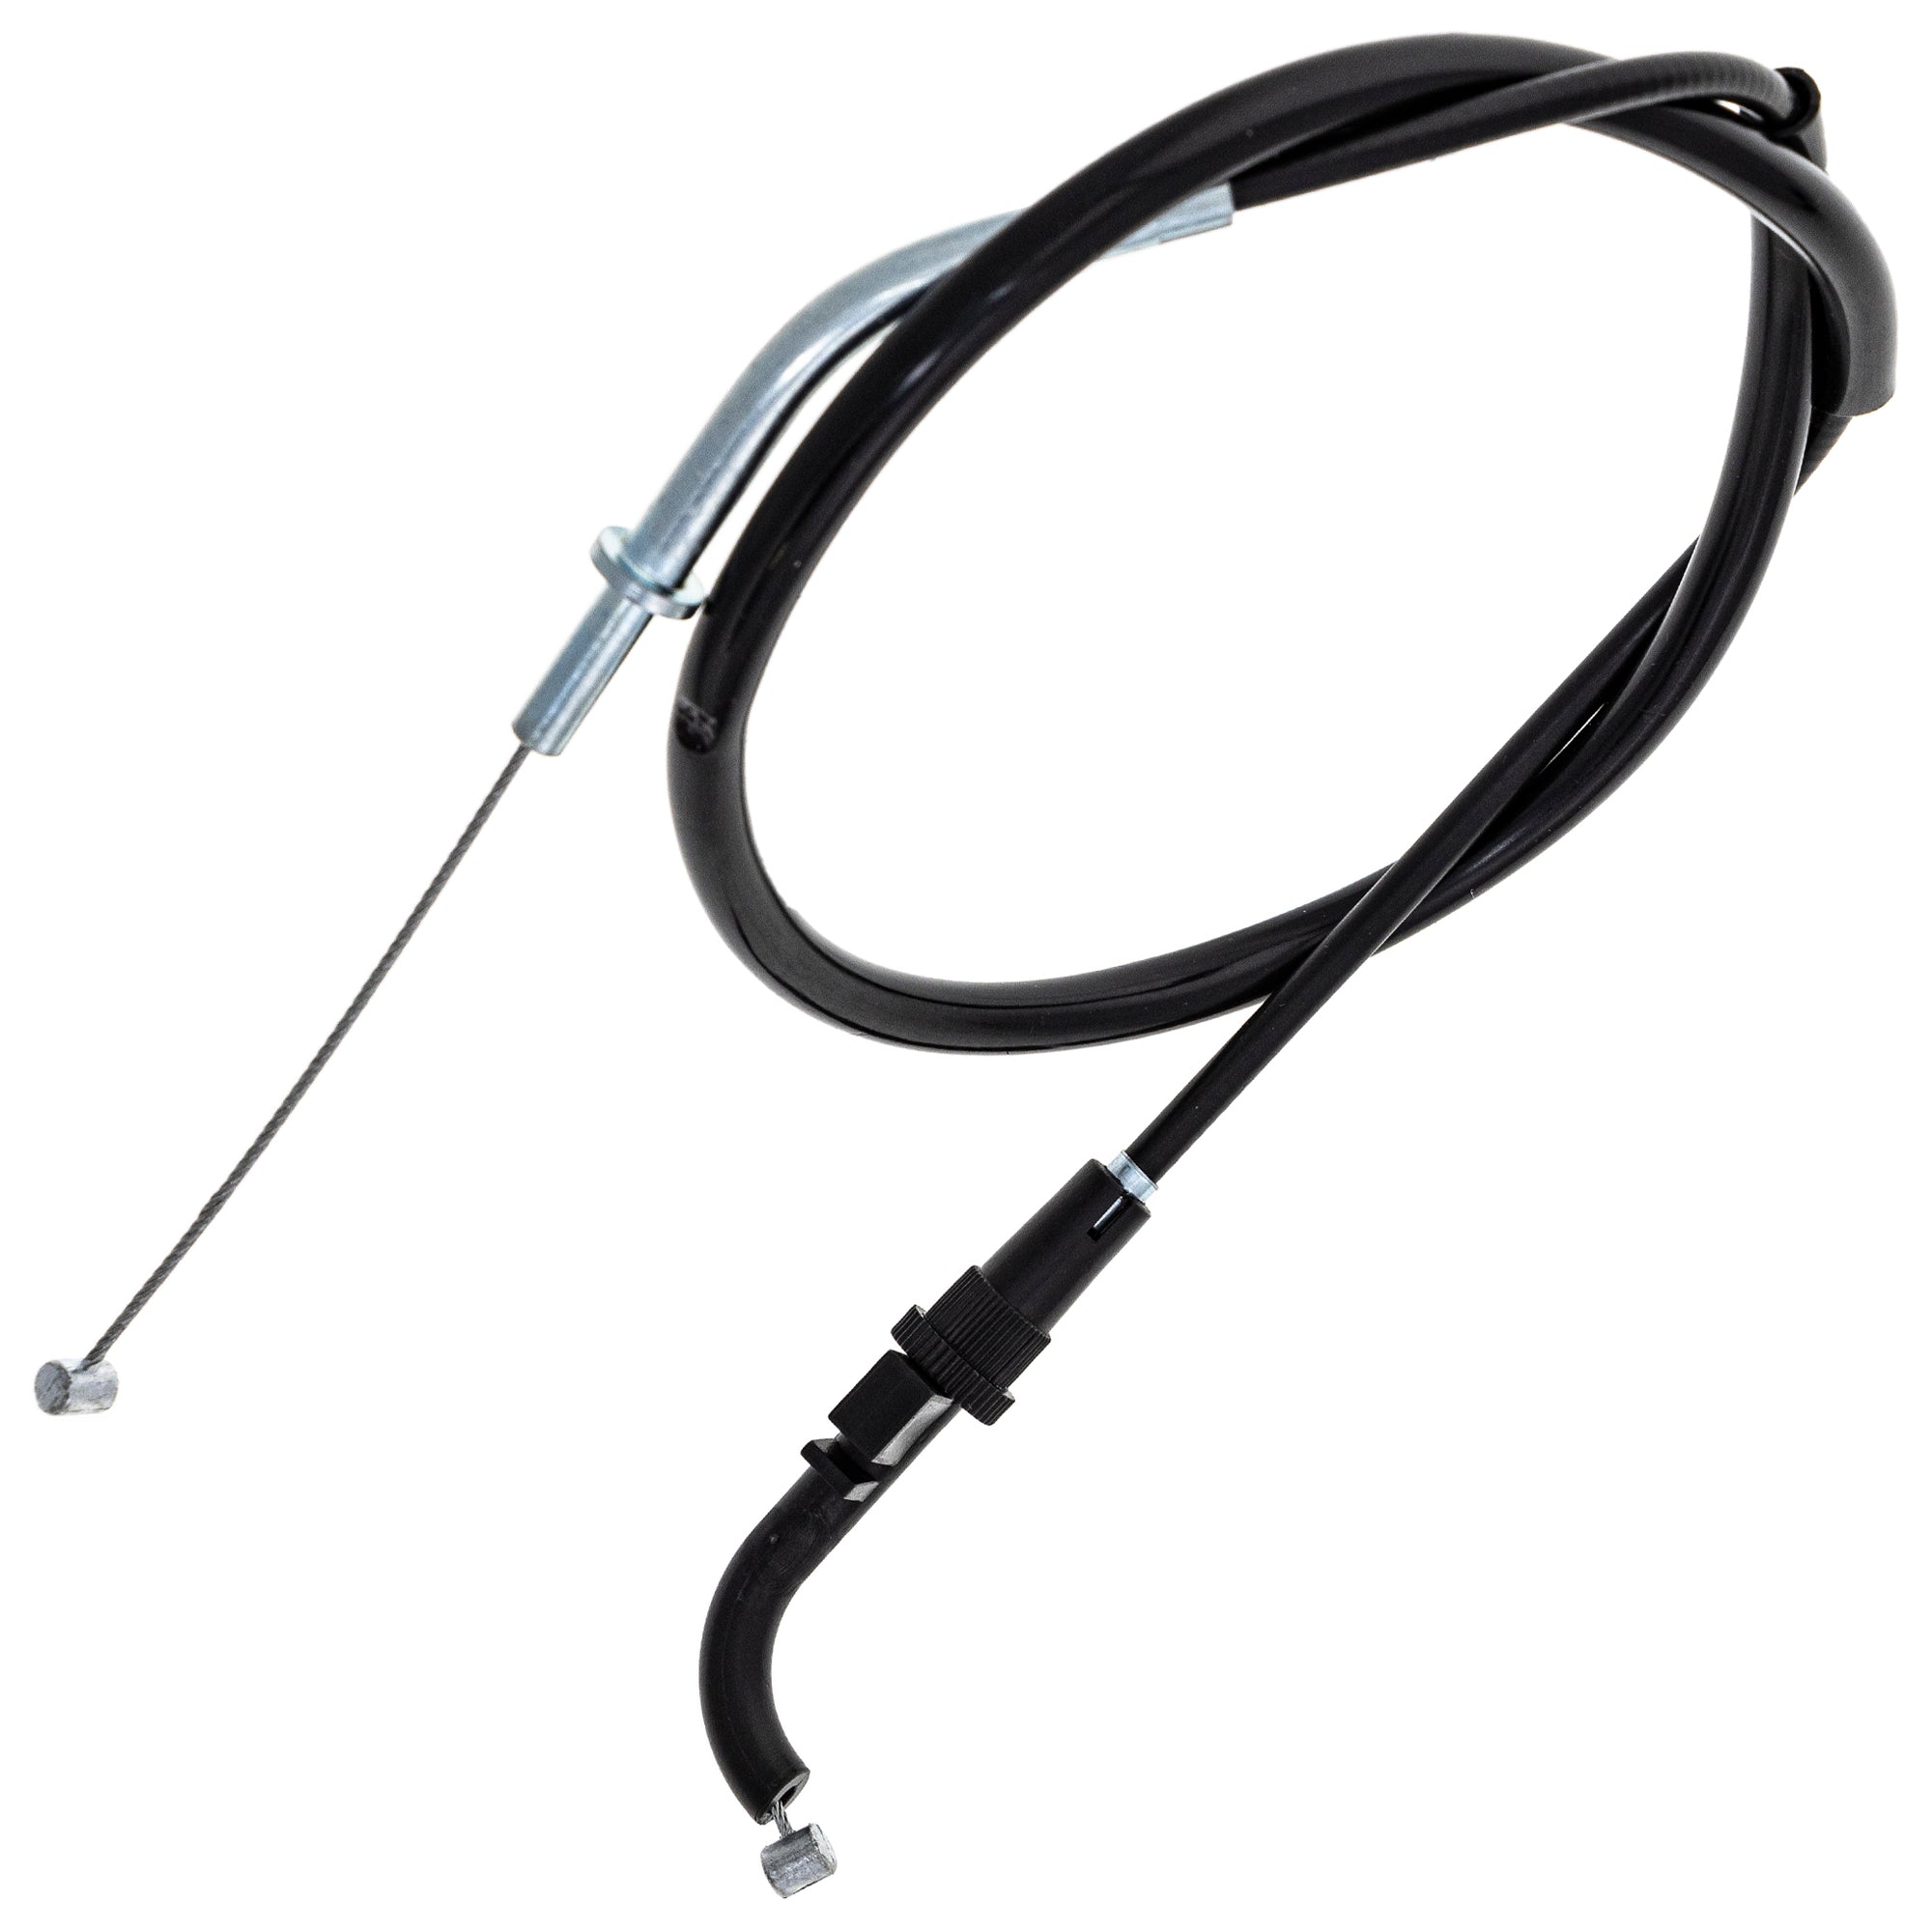 Pull Throttle Cable for Kawasaki Ninja 650R 54012-0226 54012-0240